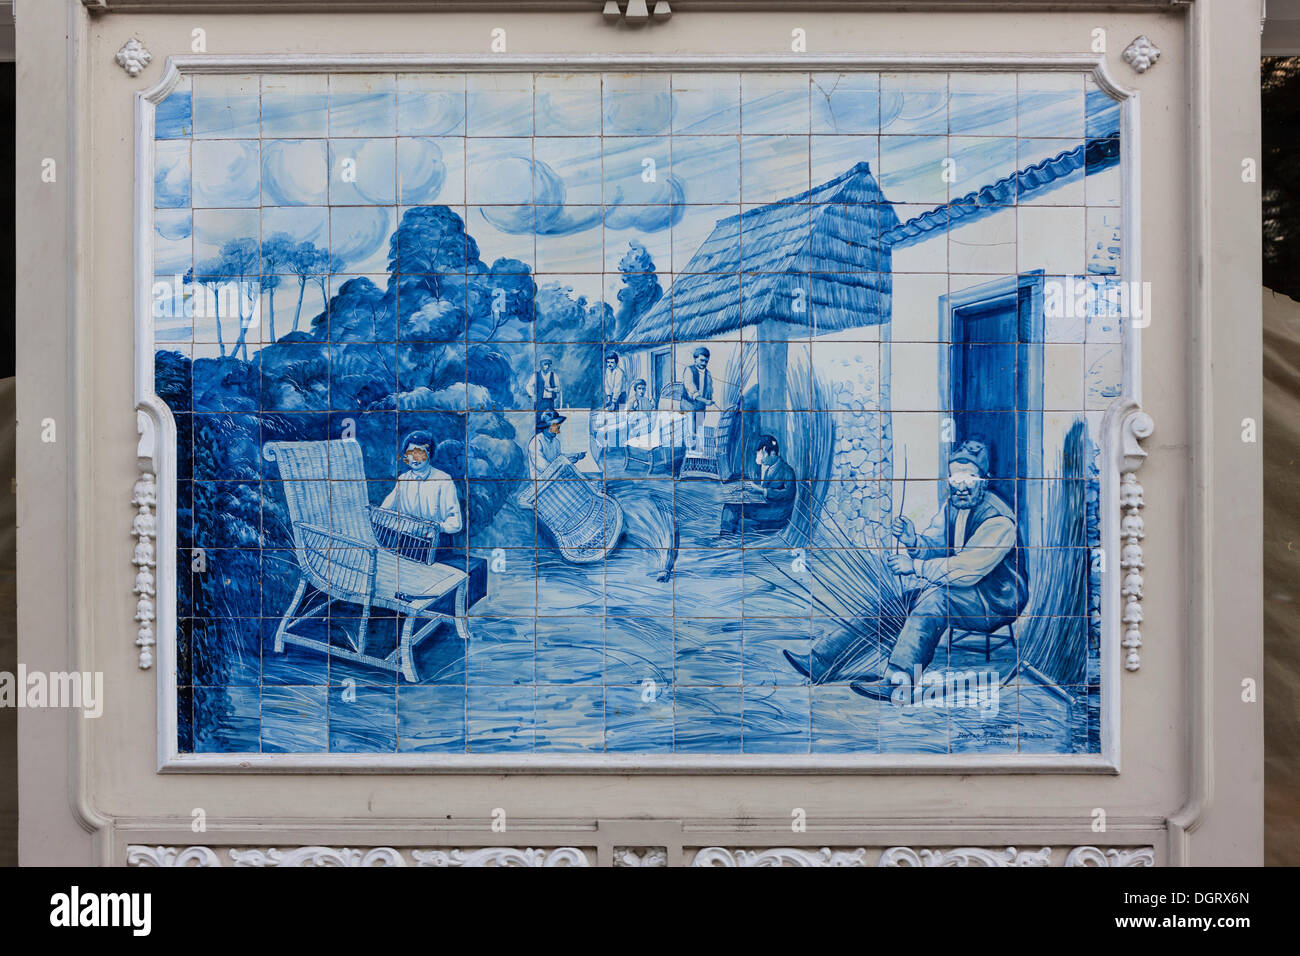 Azulejo, mural made of ceramic tiles, farmers weaving wicker objects, in Funchal, Santa Luzia, Funchal, Madeira, Portugal Stock Photo